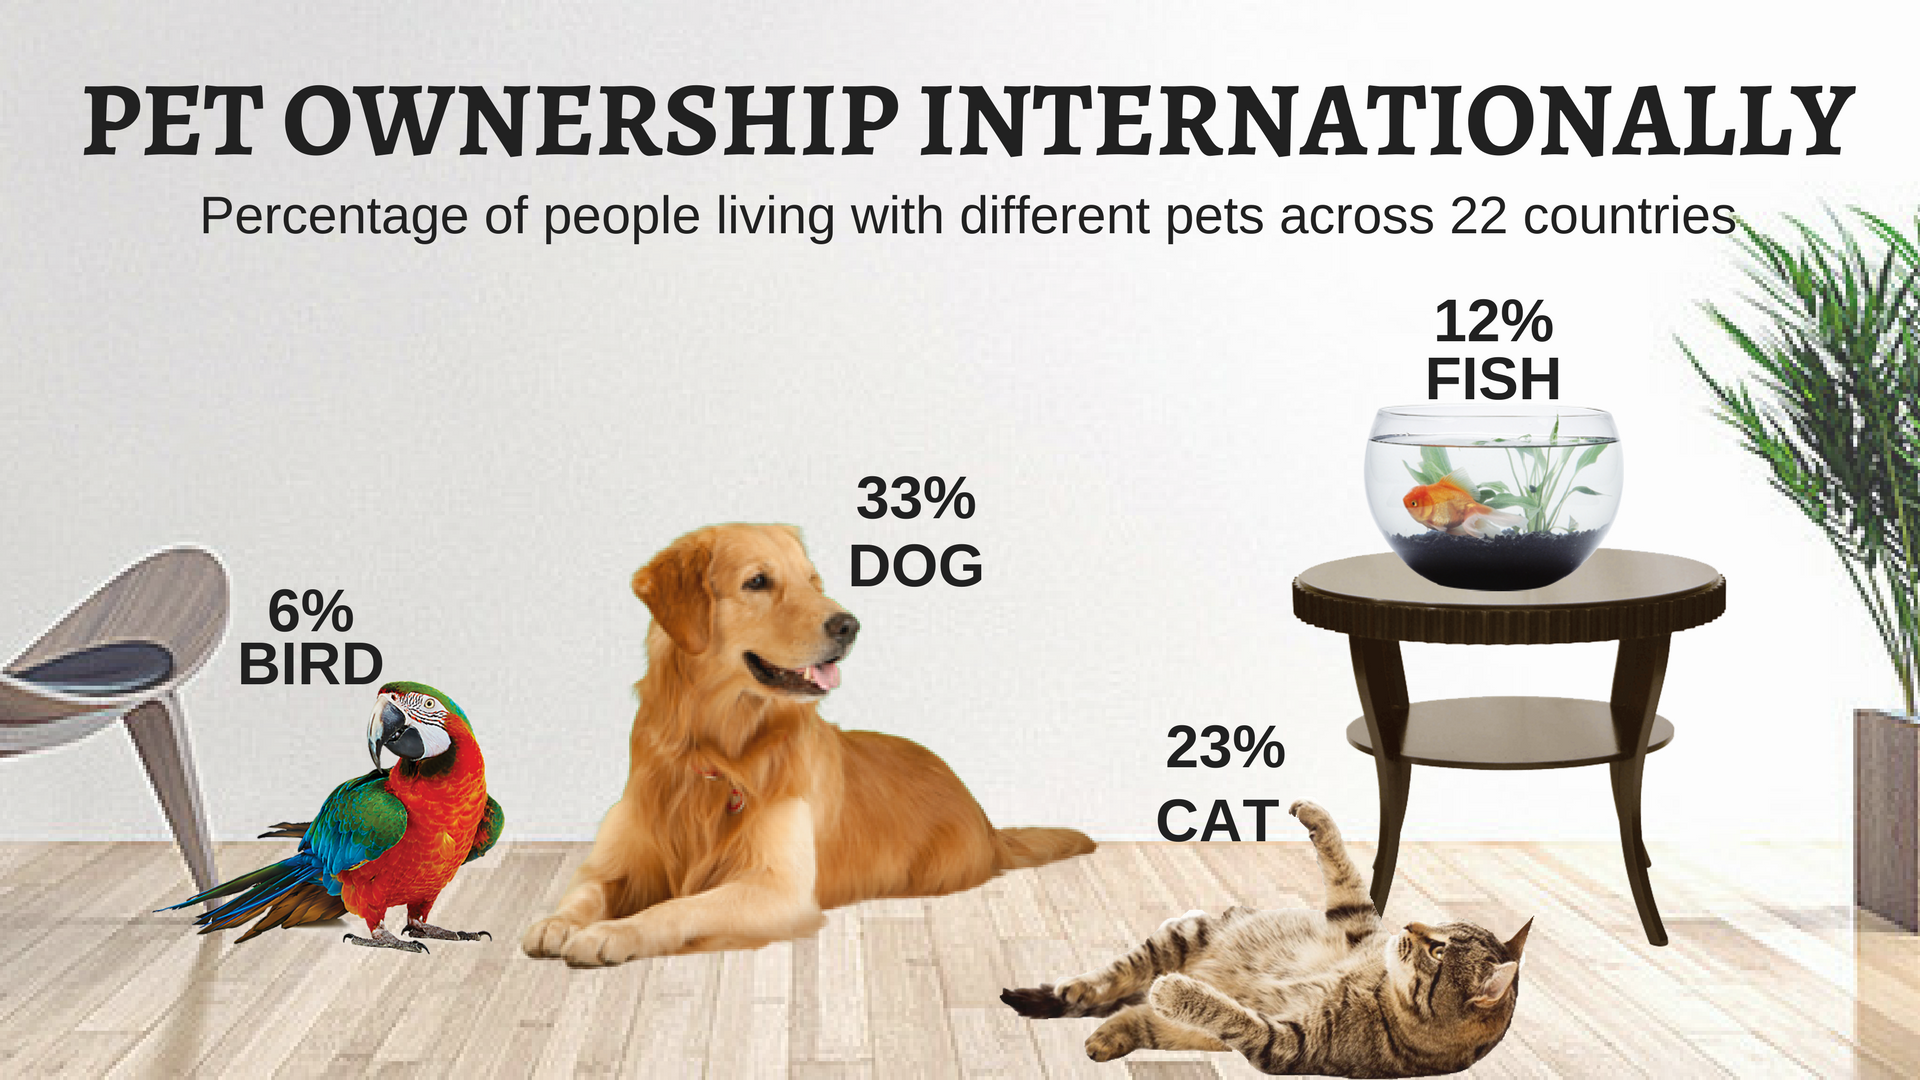 Pet ownership internationally